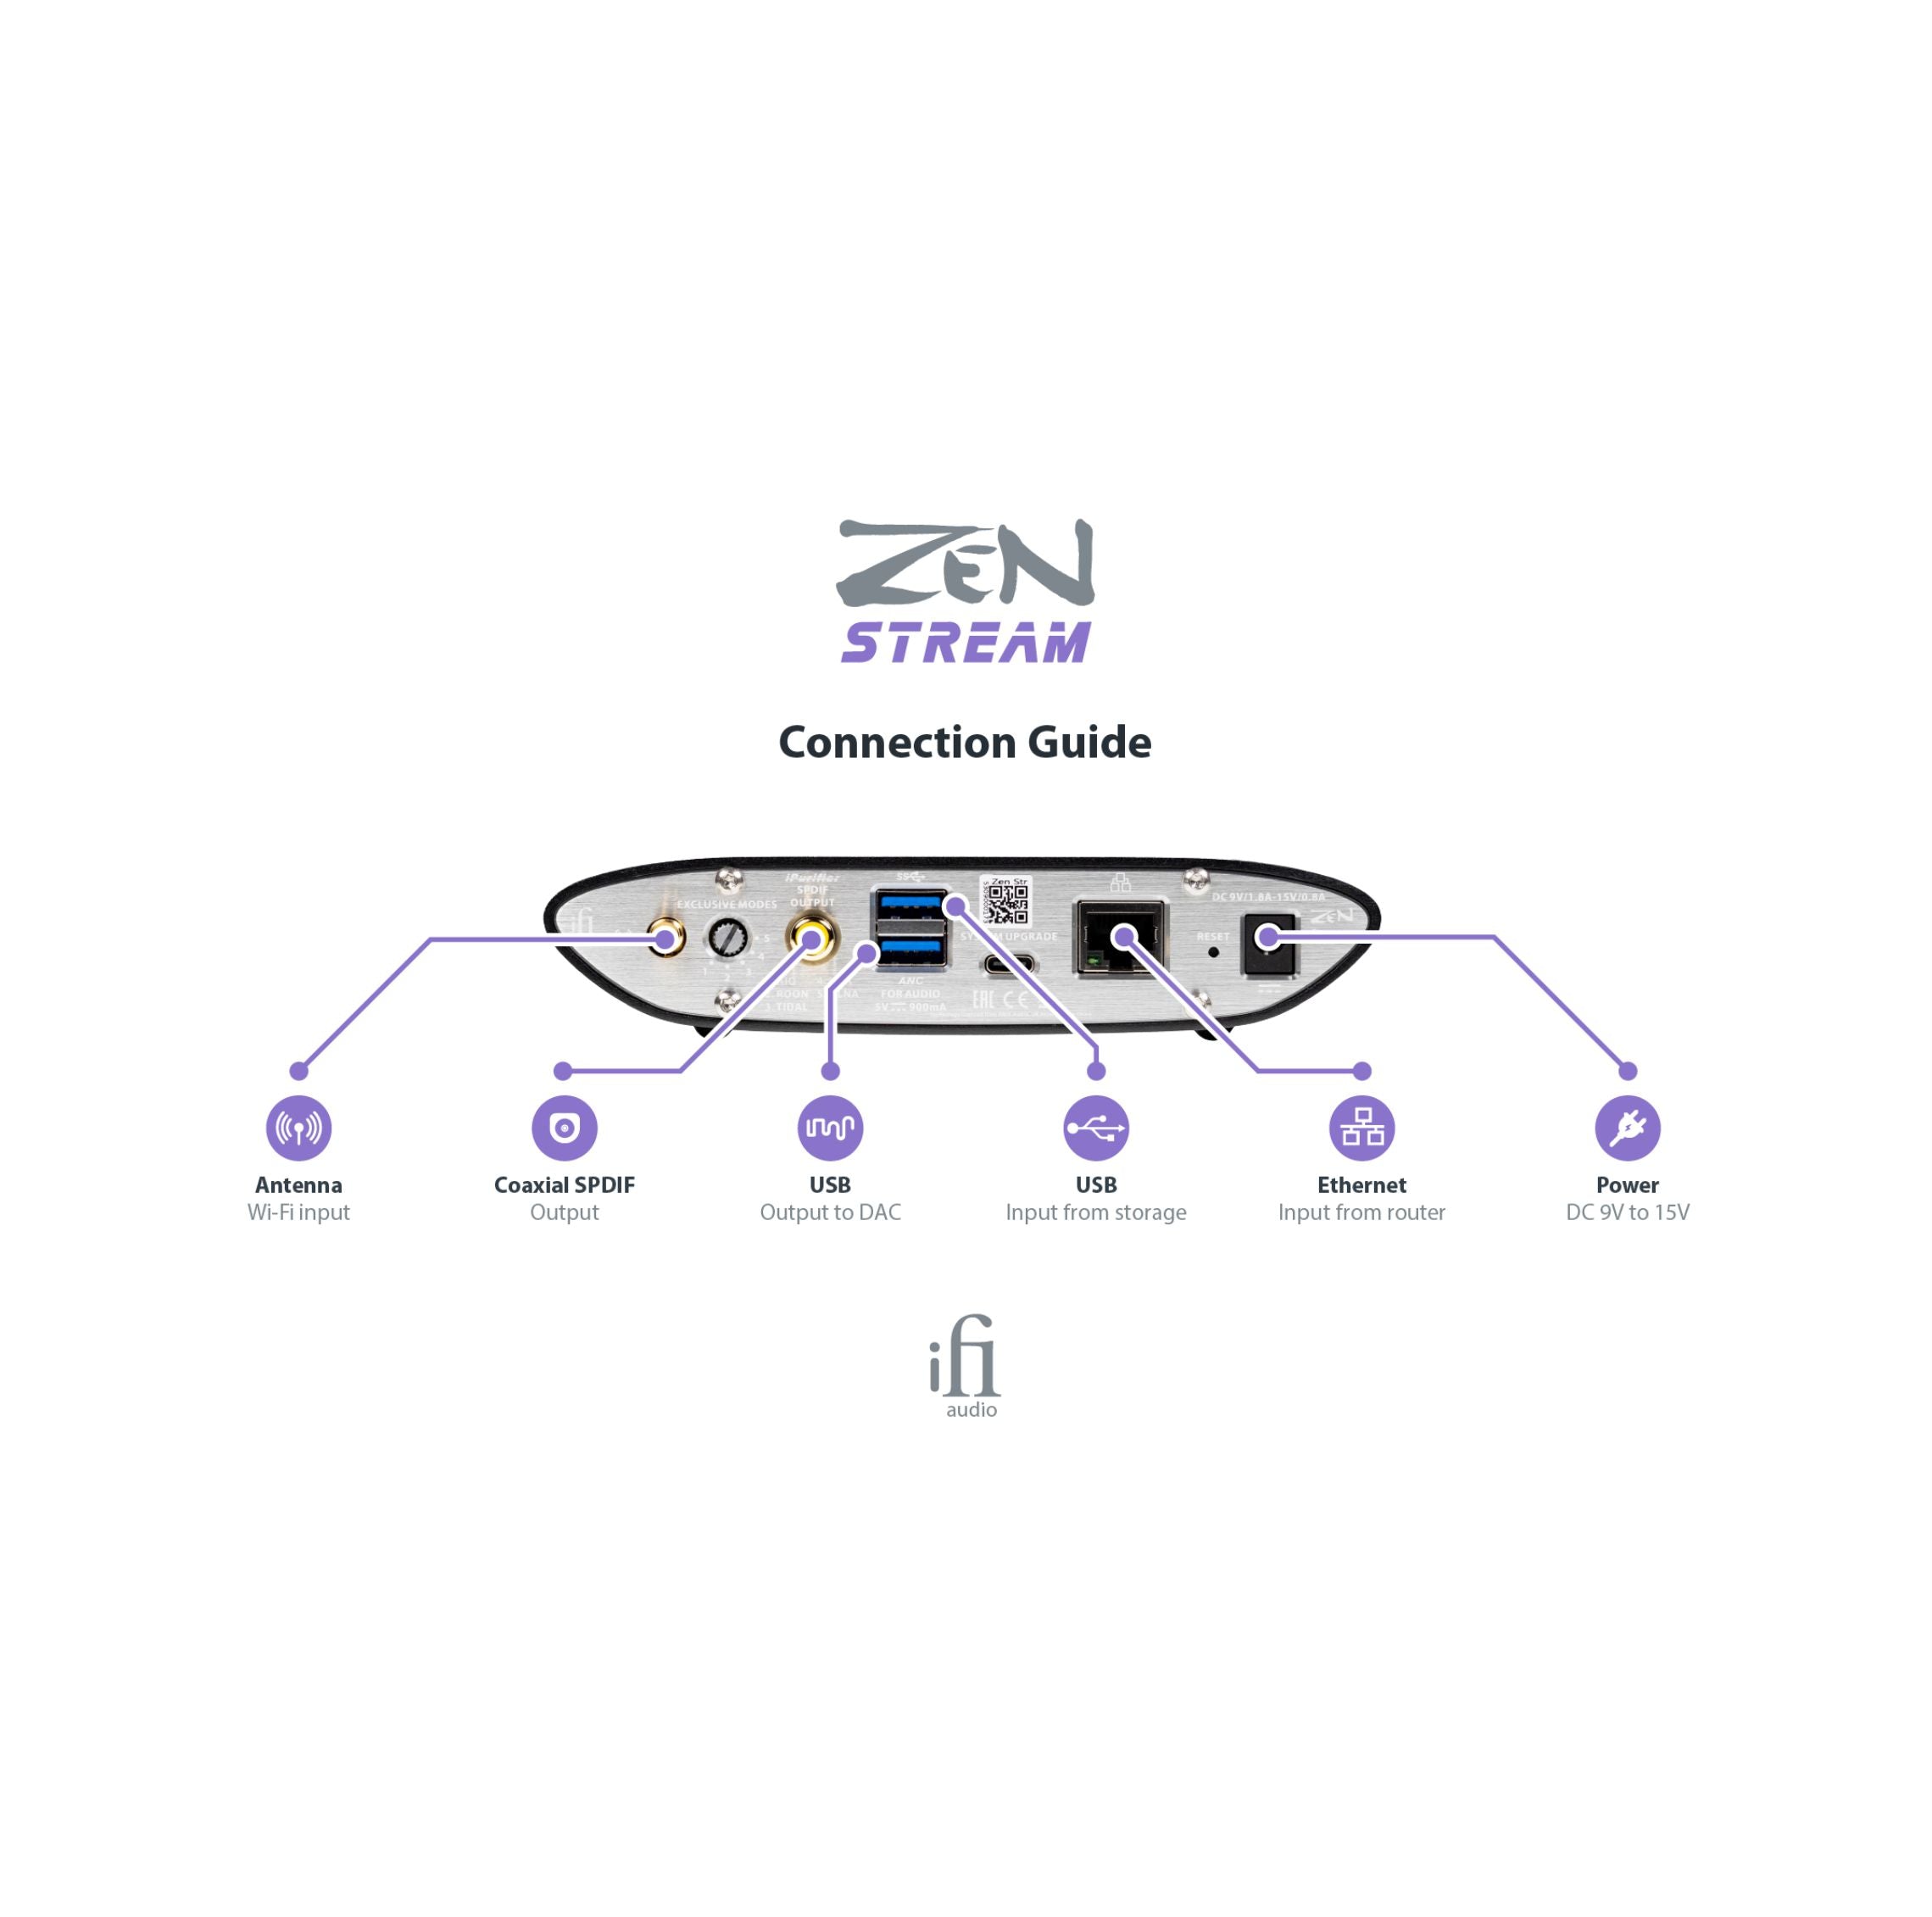 Zen Stream